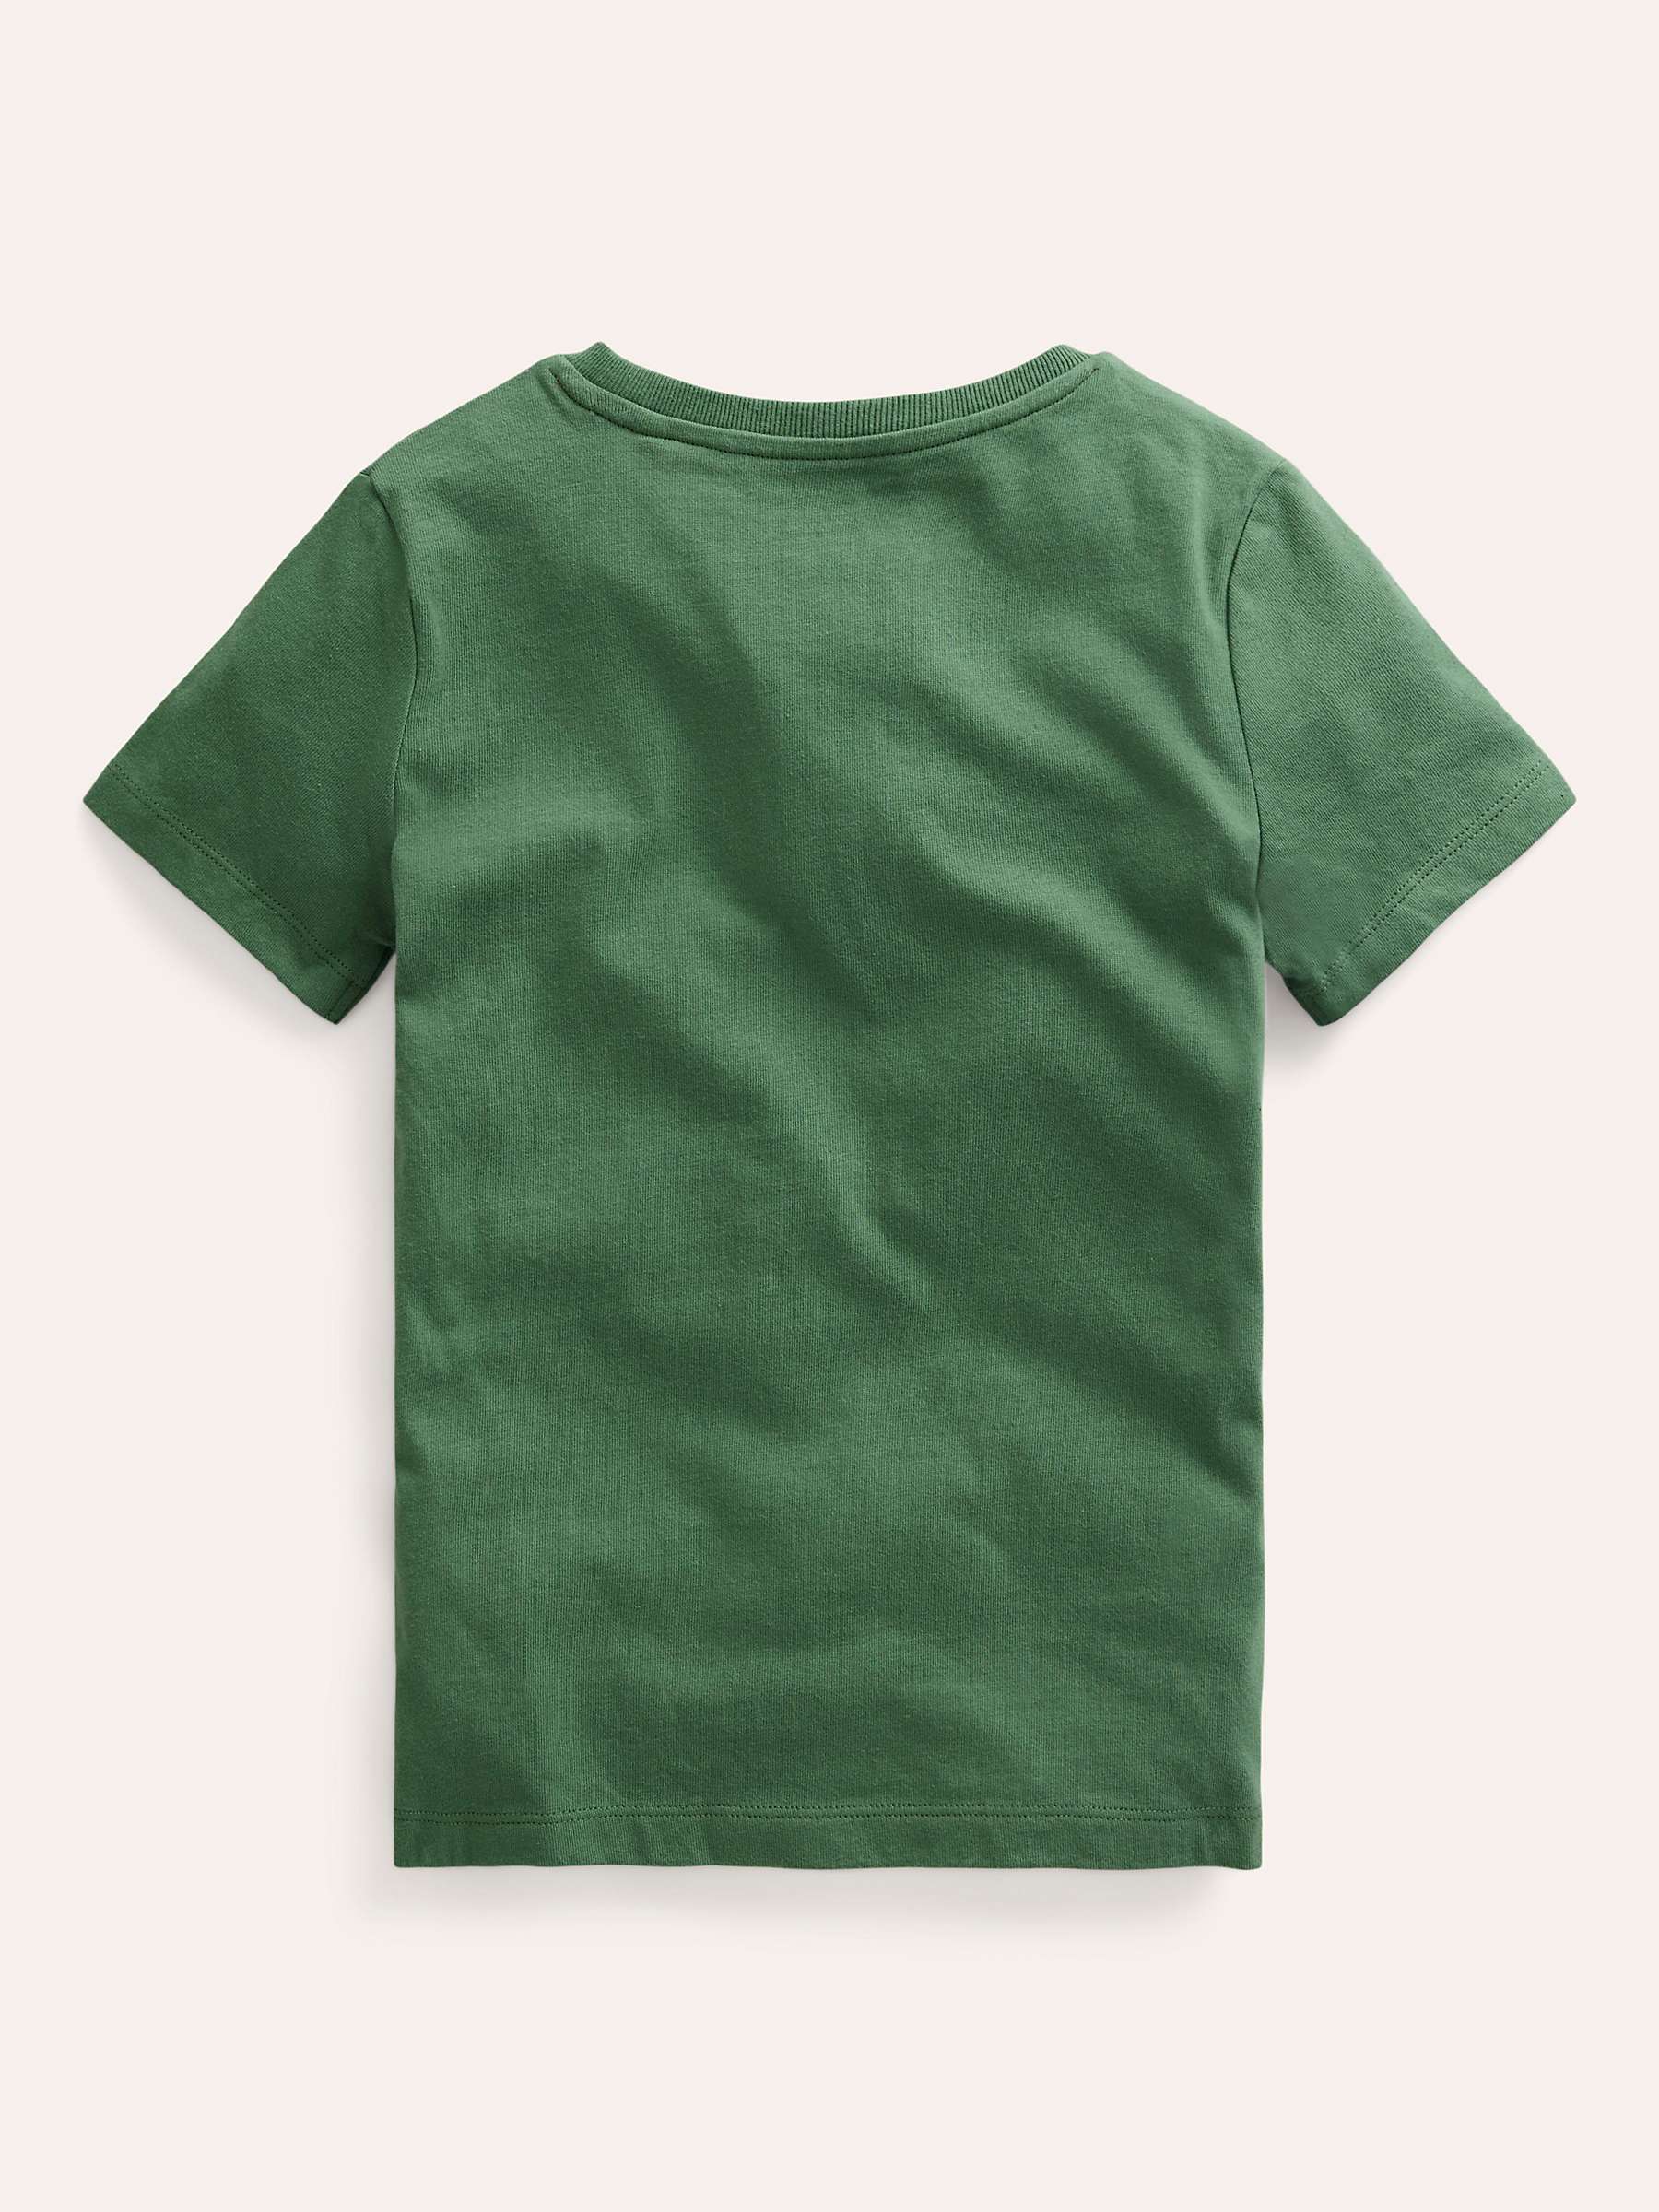 Buy Boden Kids' Chainstitch Crocodile T-Shirt, Green/Multi Online at johnlewis.com